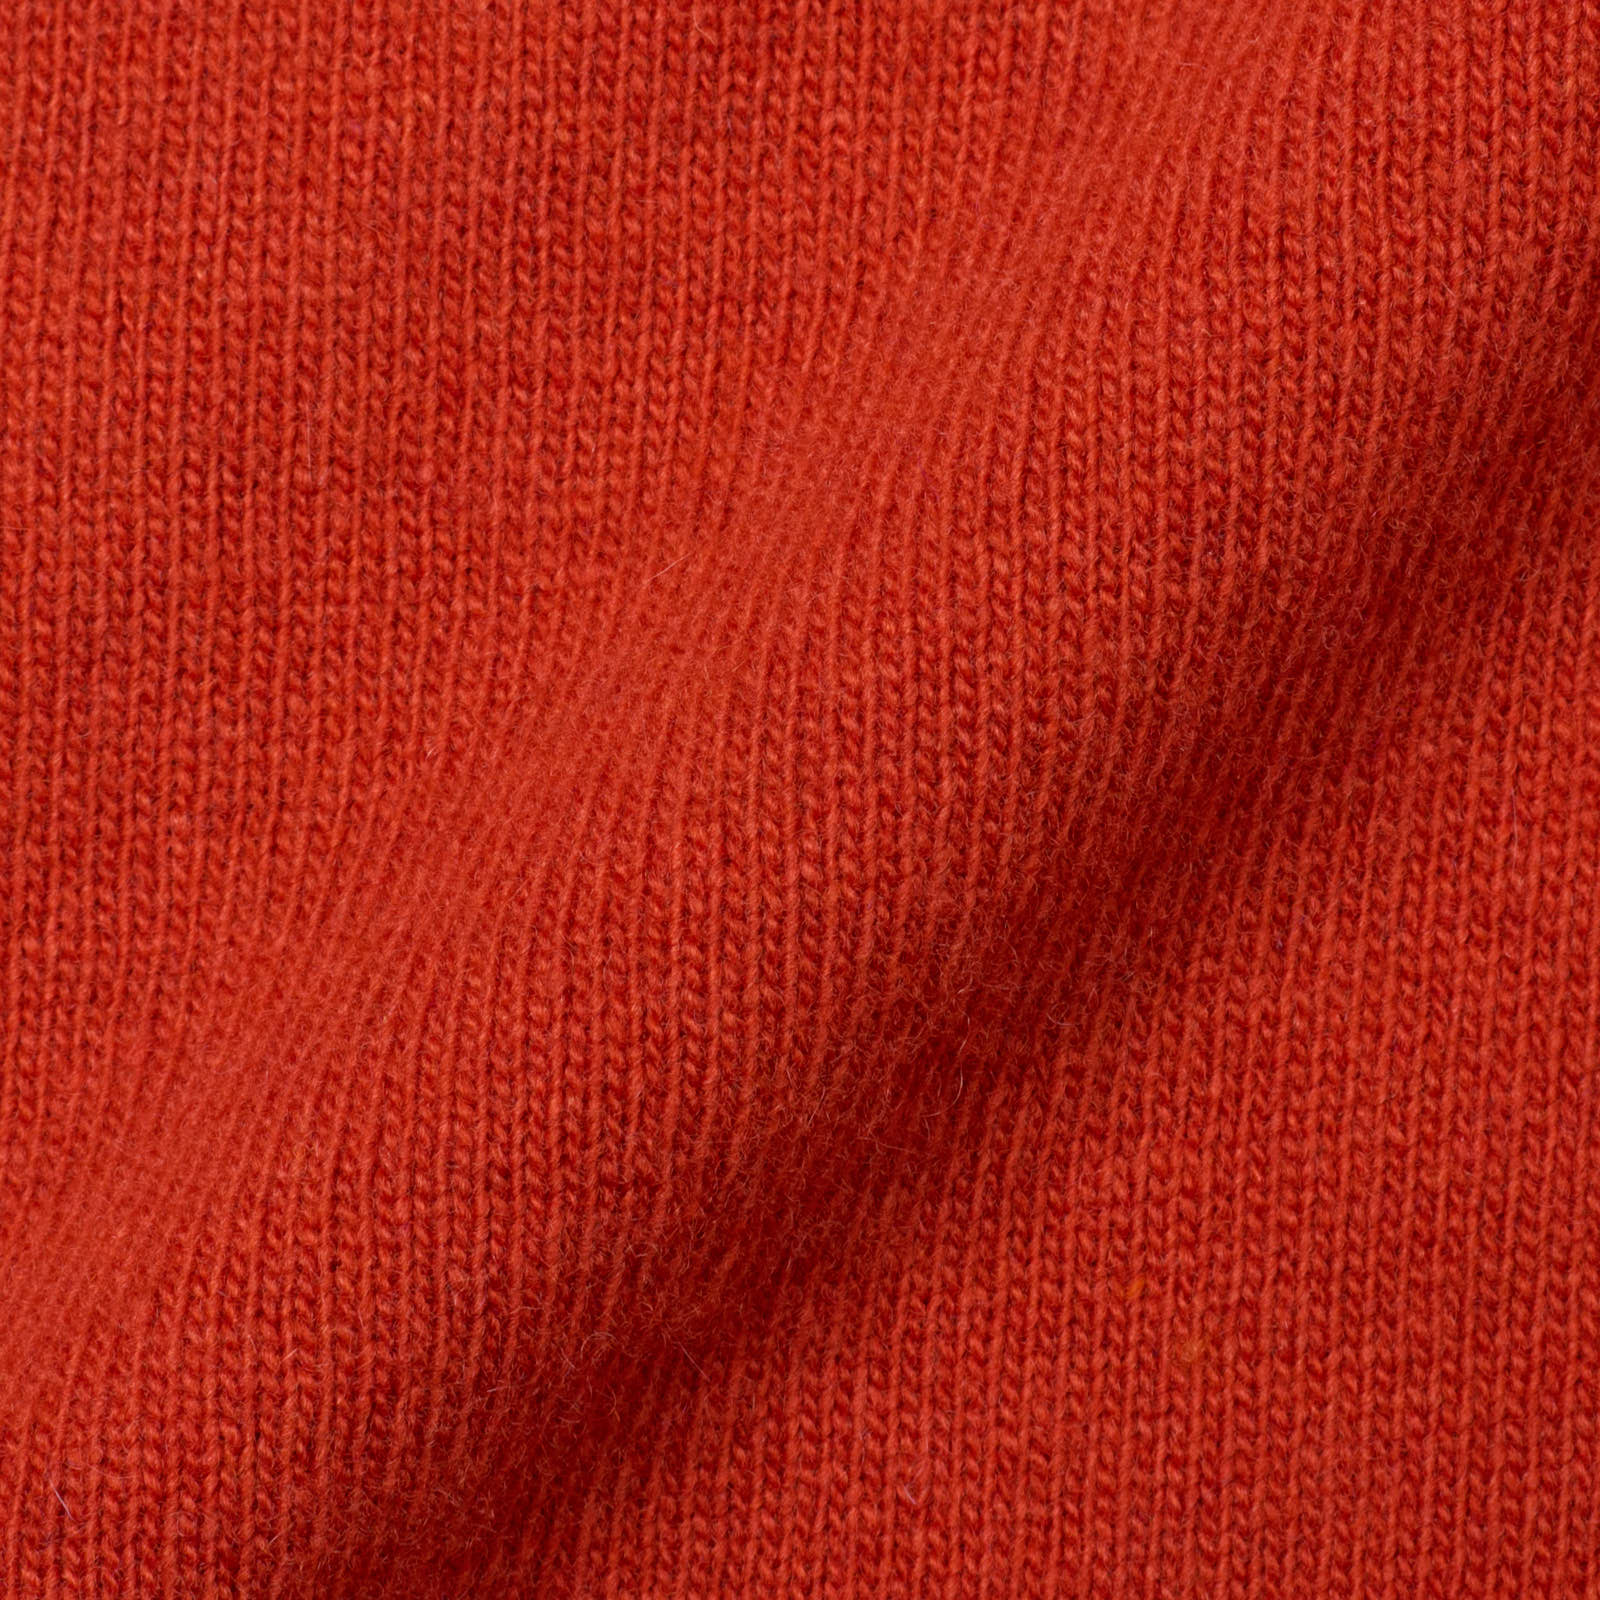 VANNUCCI Milano Burnt Orange Wool-Cashmere Knit Turtleneck Sweater EU 52 US L